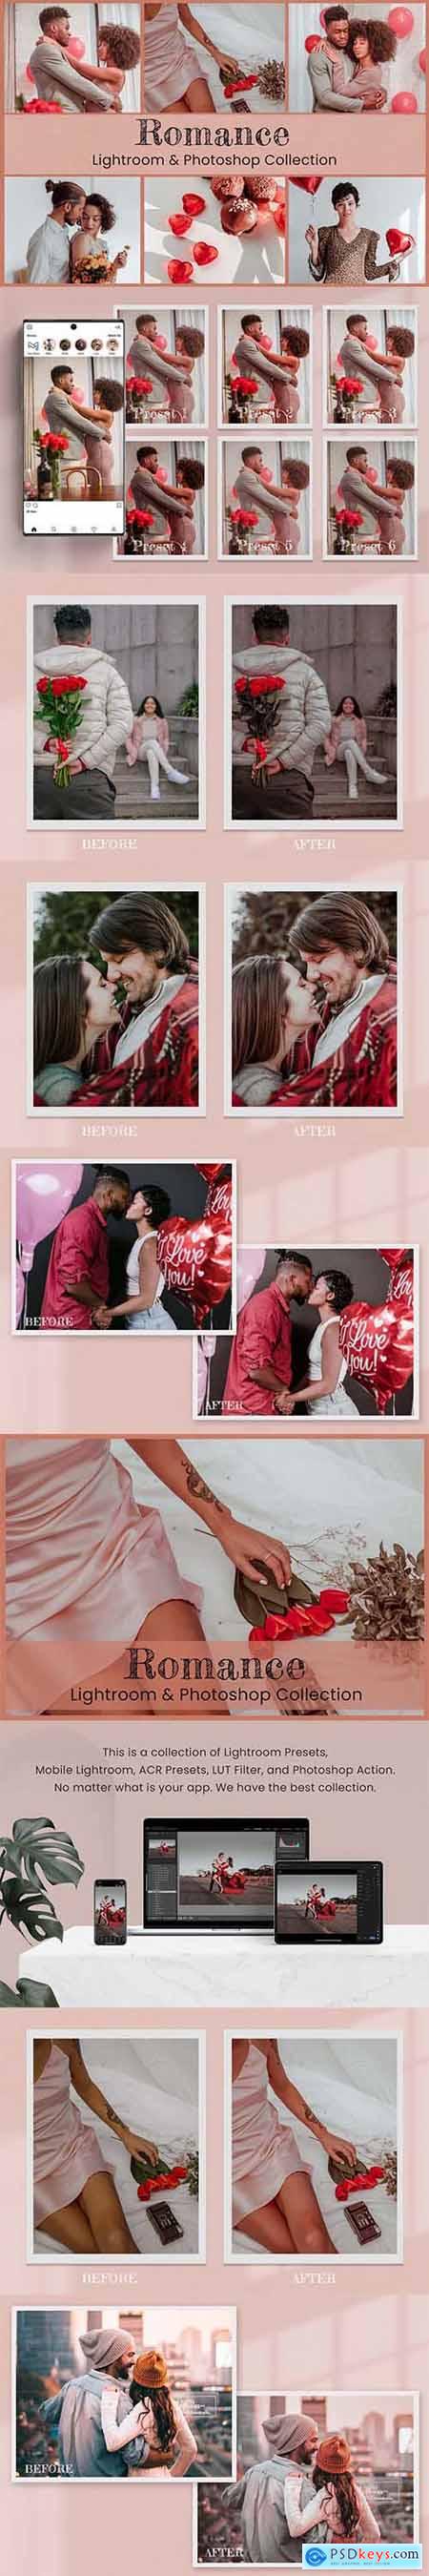 Romance Lightroom Photoshop LUTs 6635279